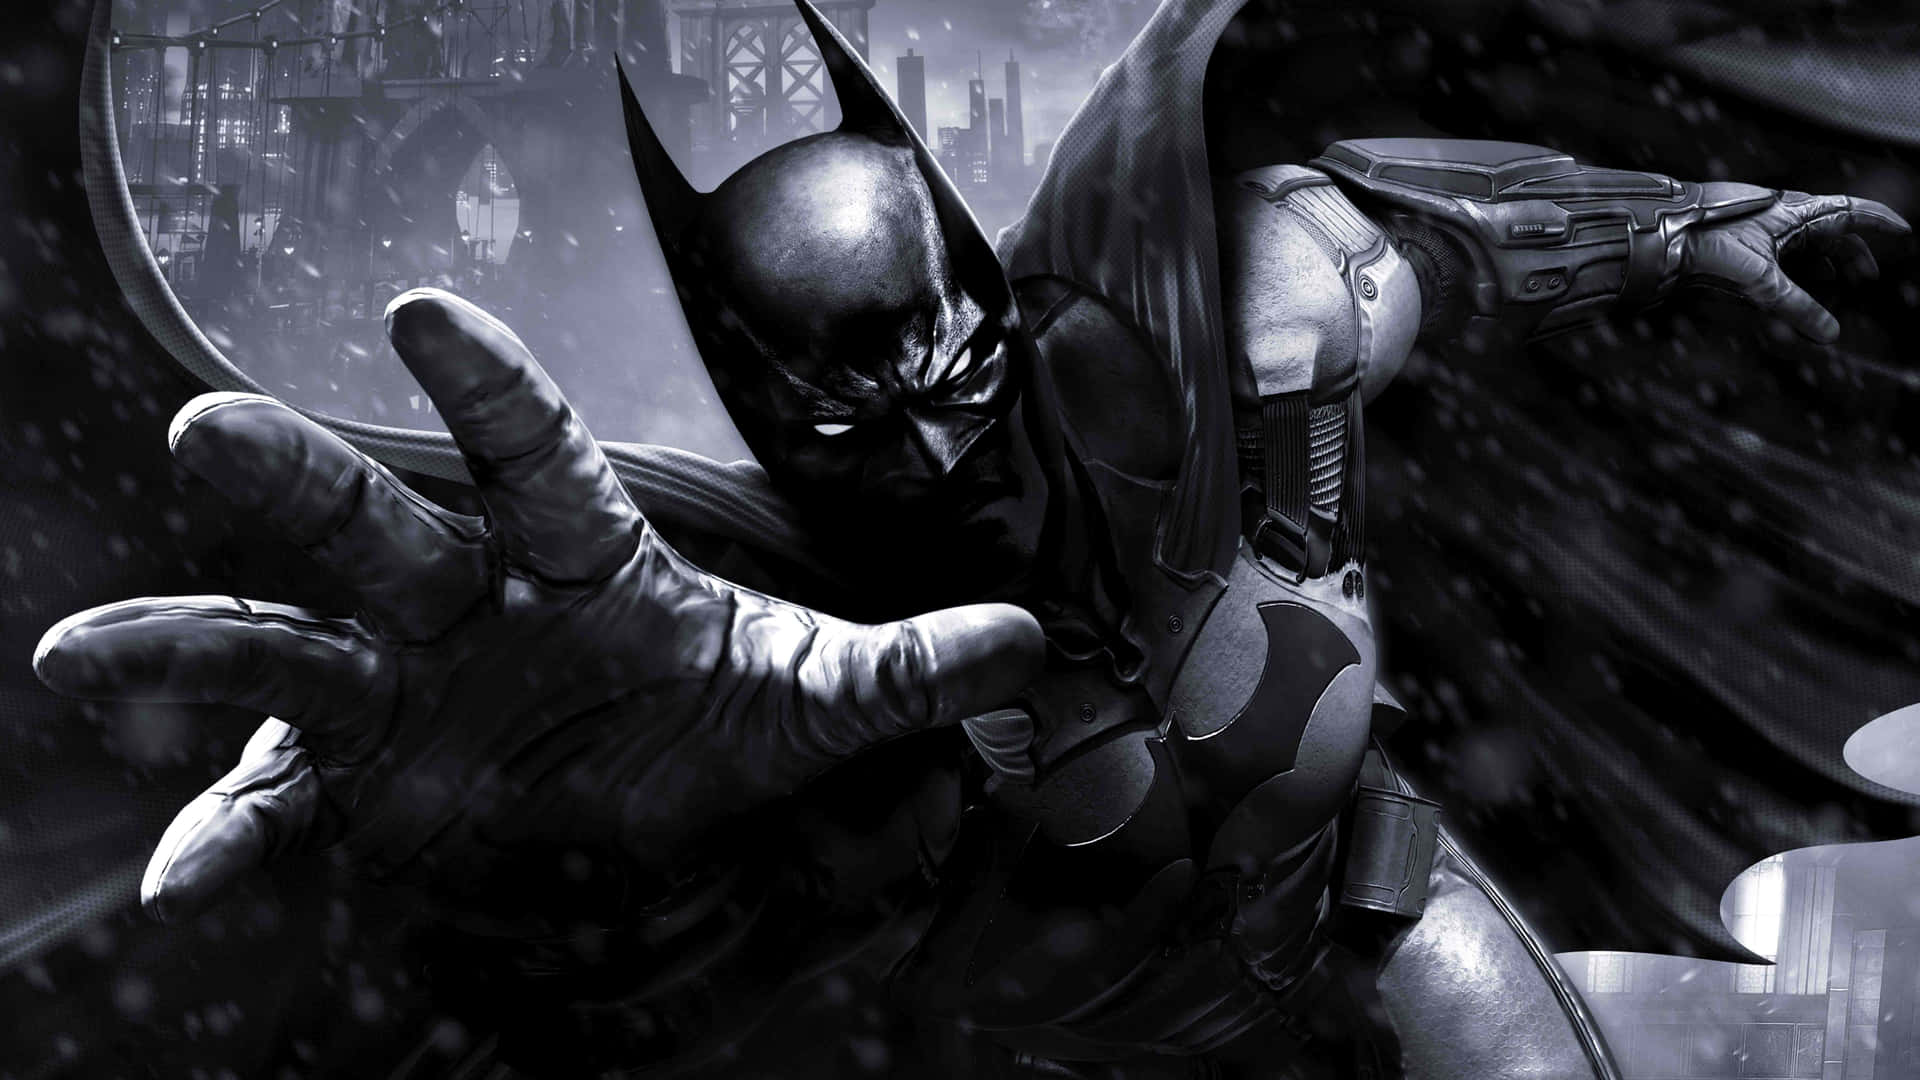 100+] Batman Arkham Knight 4k Wallpapers